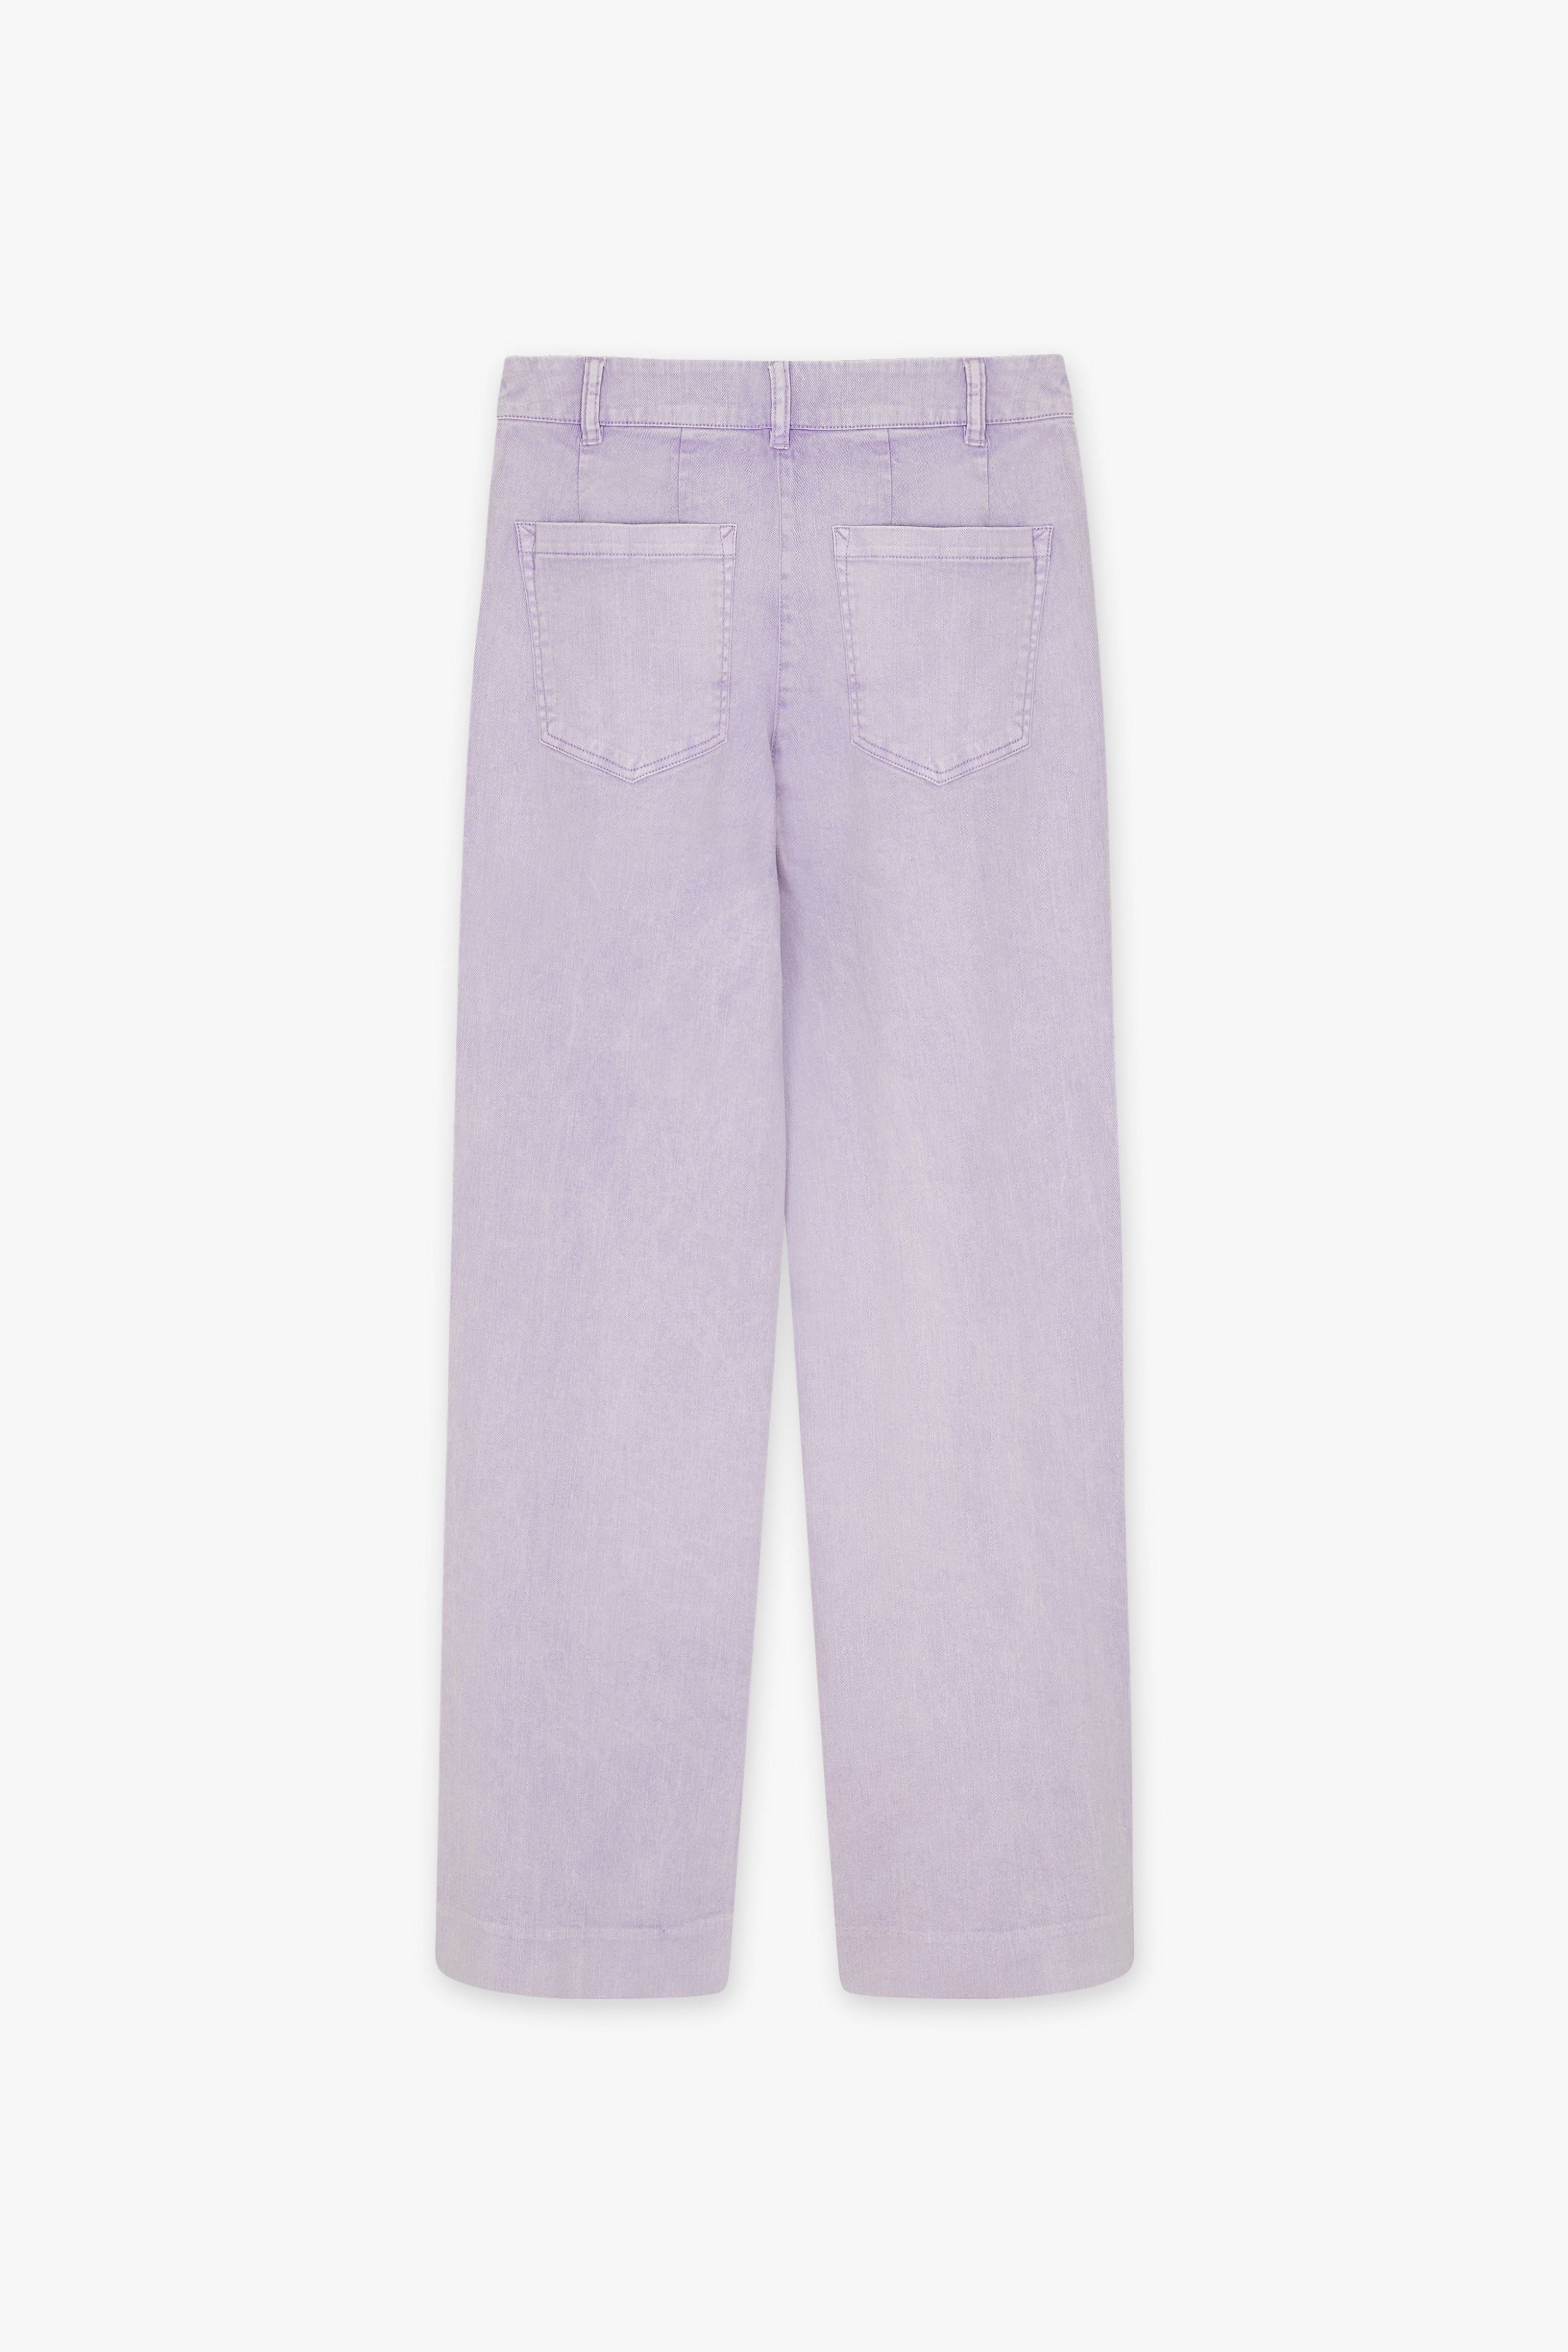 CKS Dames - RODA - lange jeans - paars